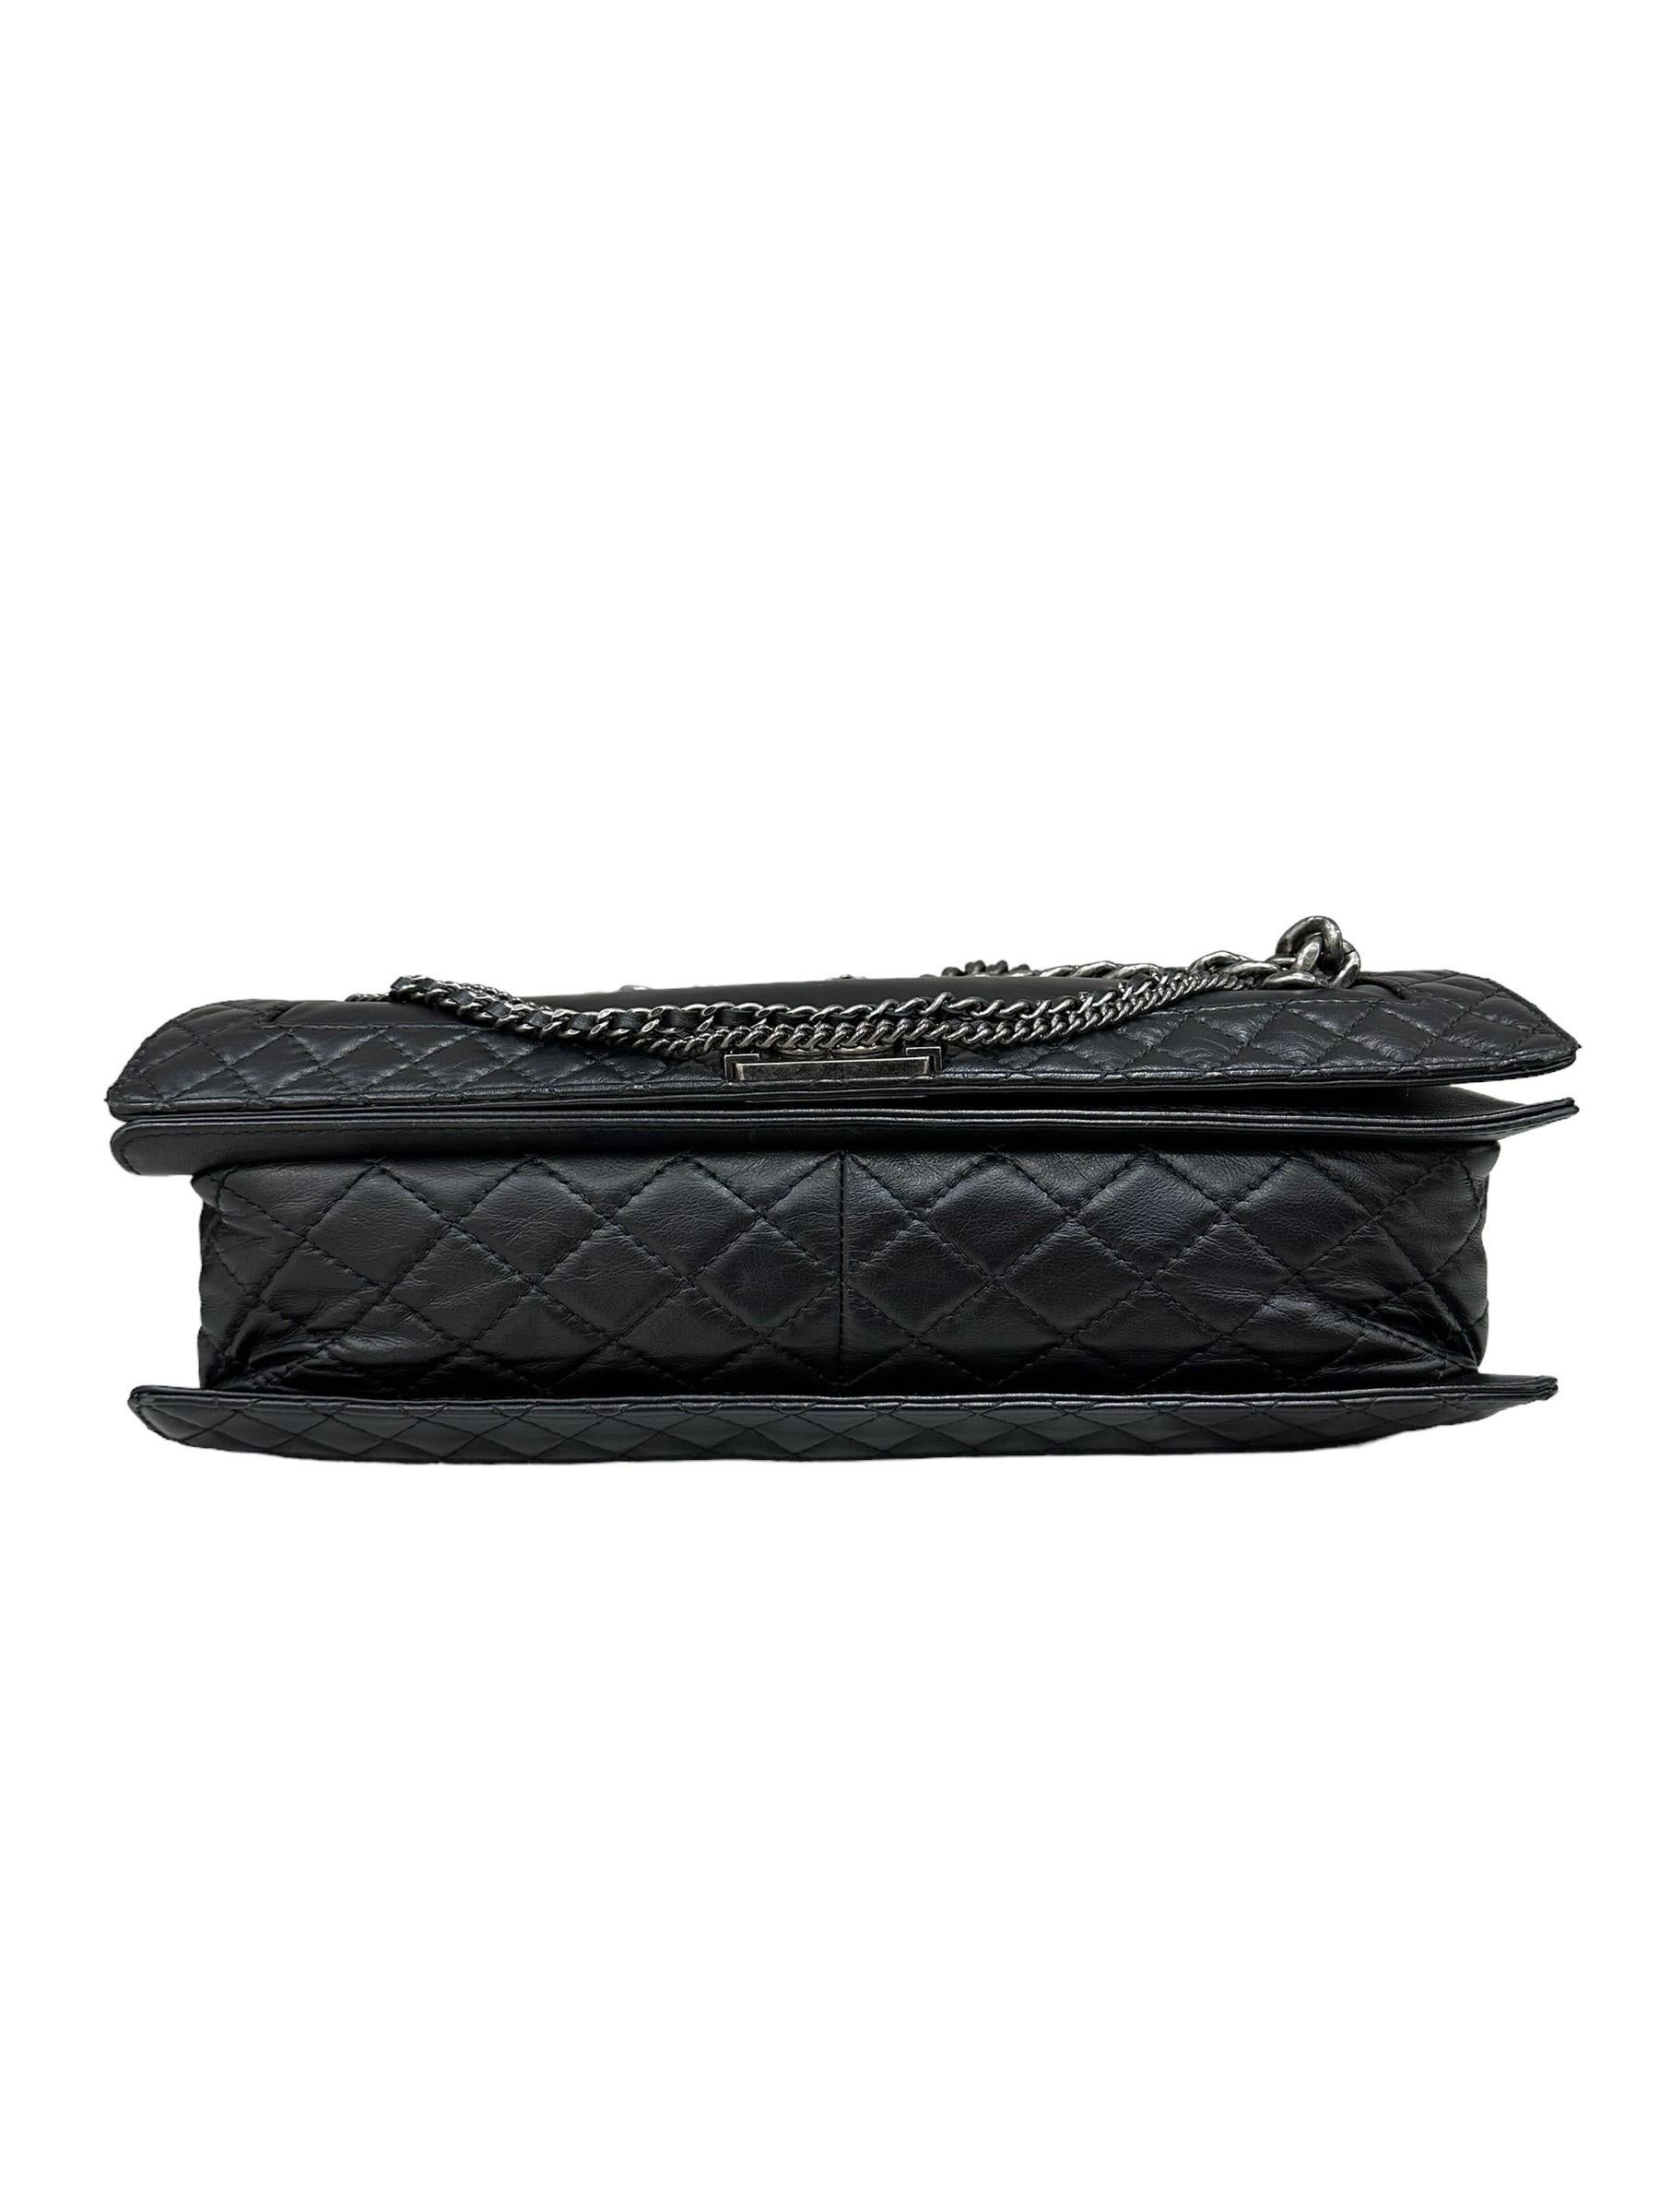 Women's 2014 Chanel Boy XL Limited Edition Shoulder Bag Multi Chains